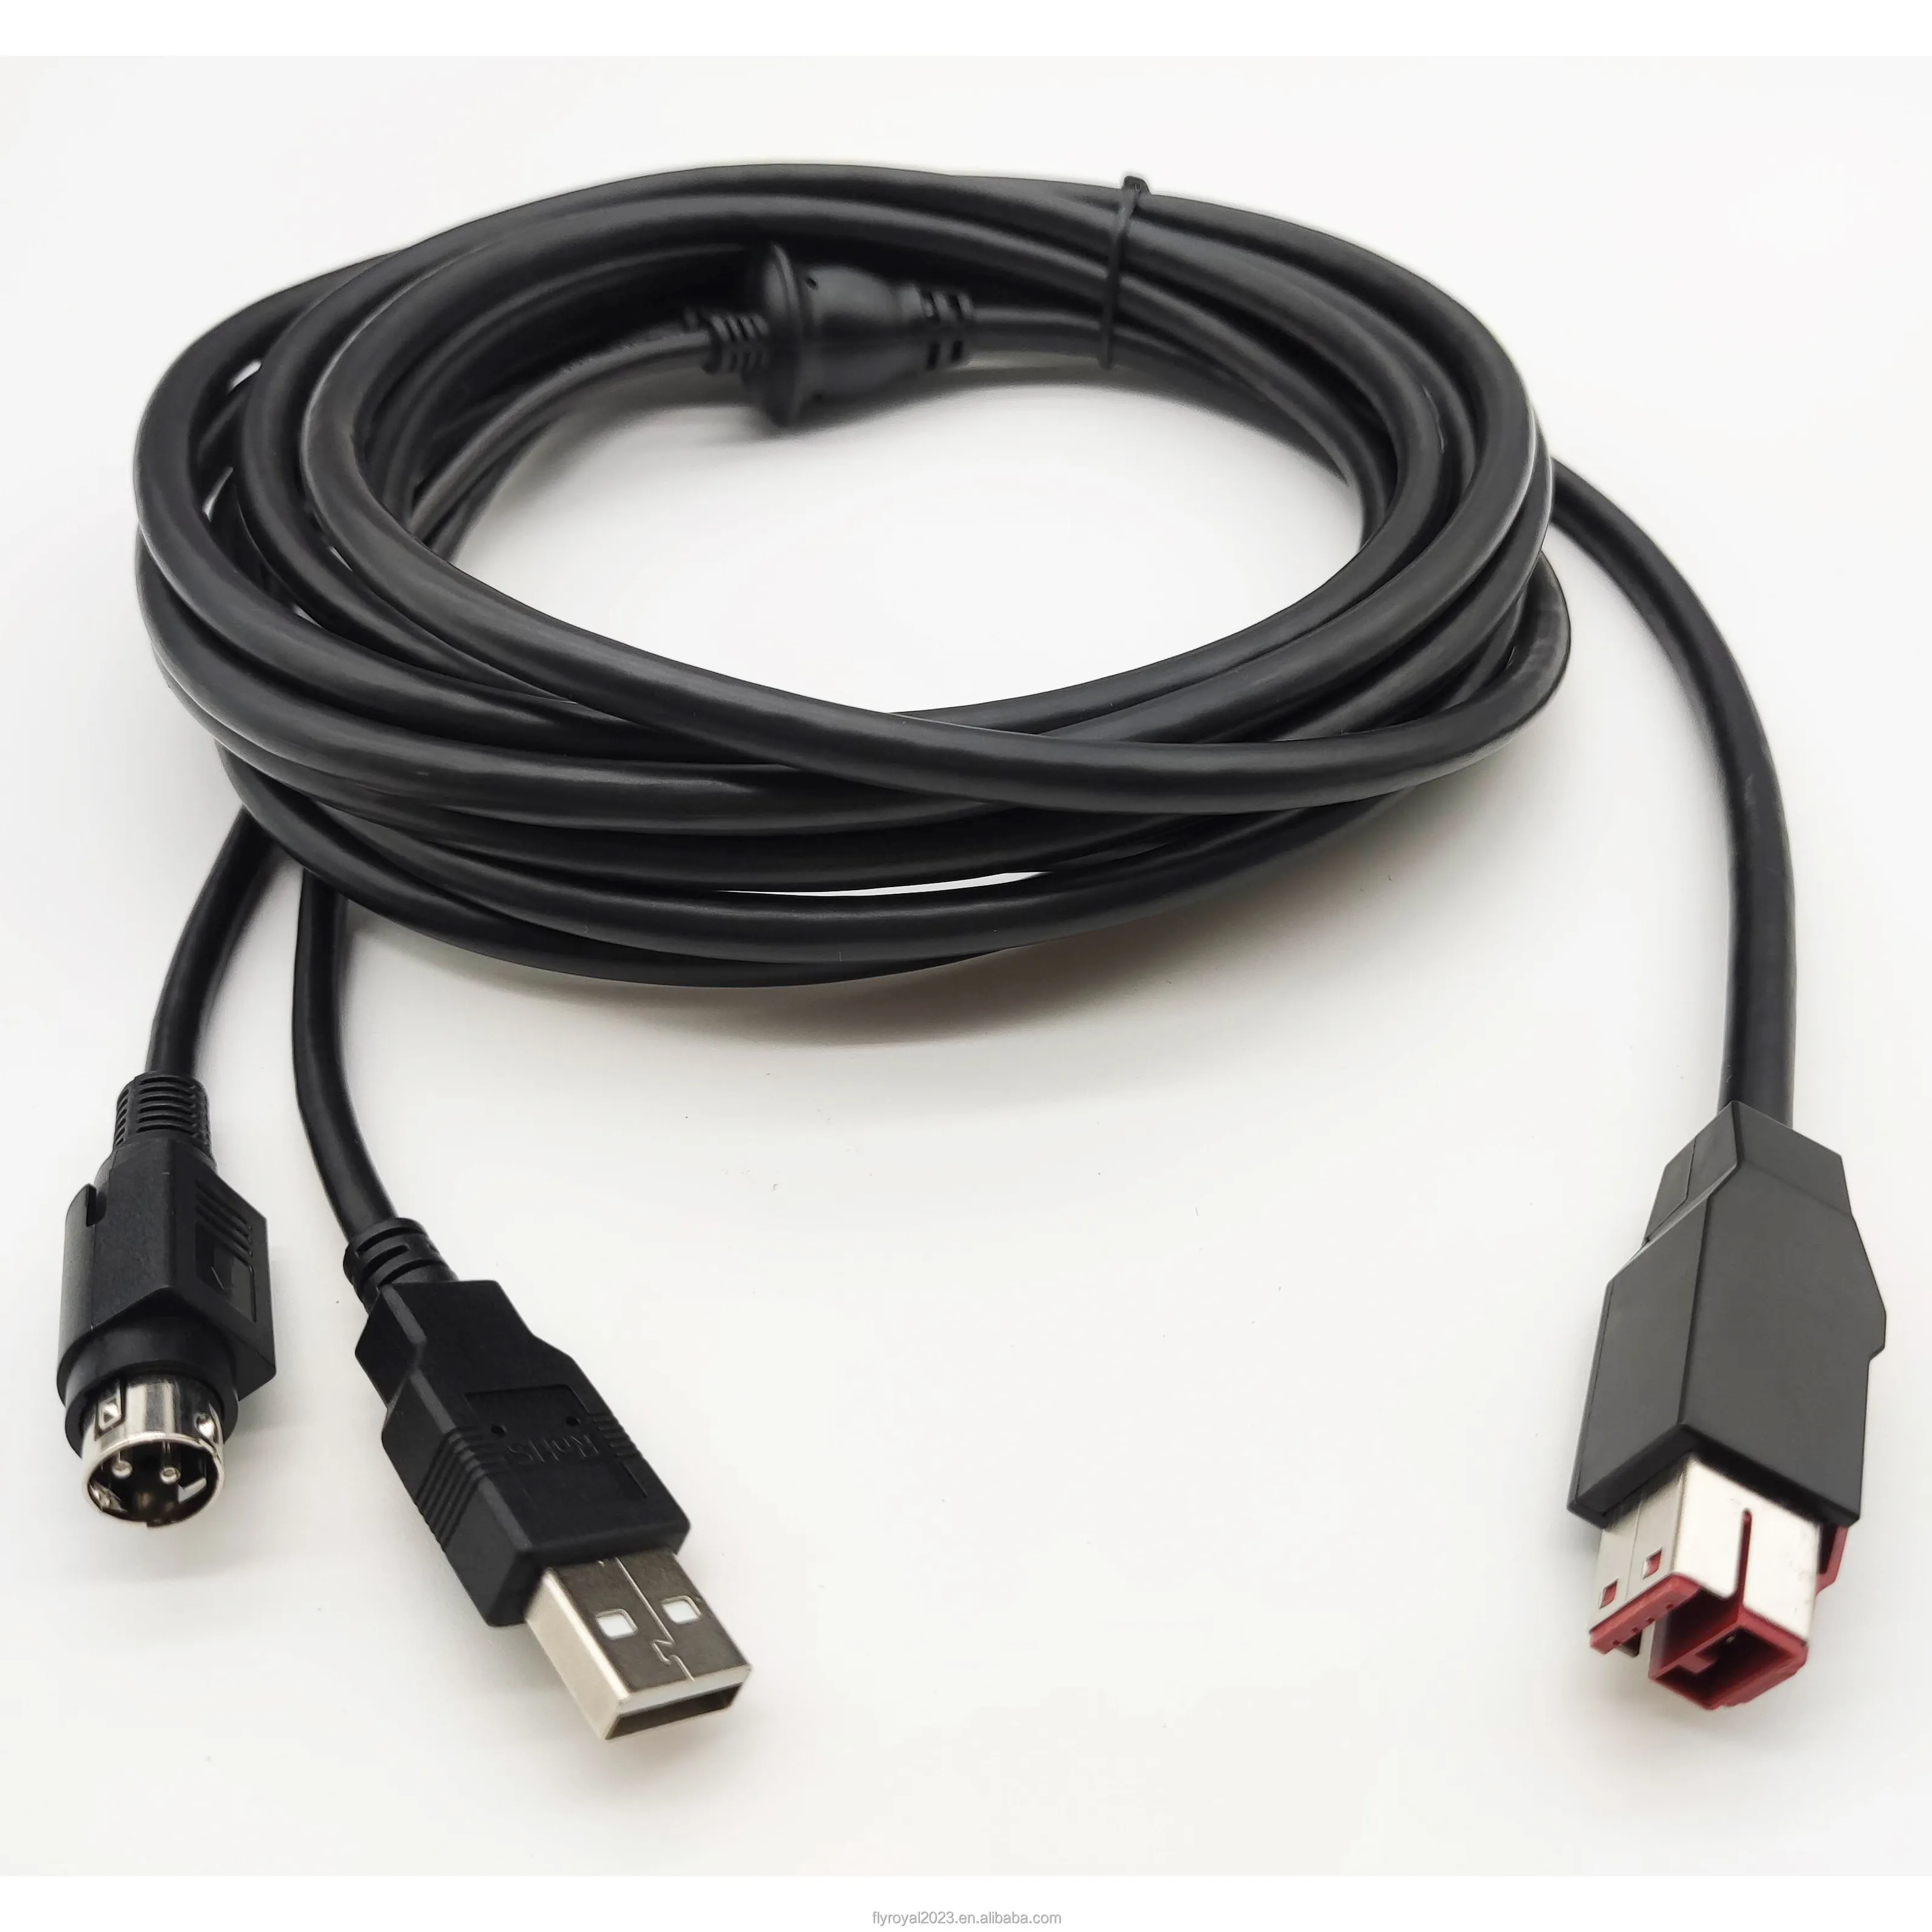 Cable de alimentación de 24V a Hosiden y USB-B, cable poweredUSB